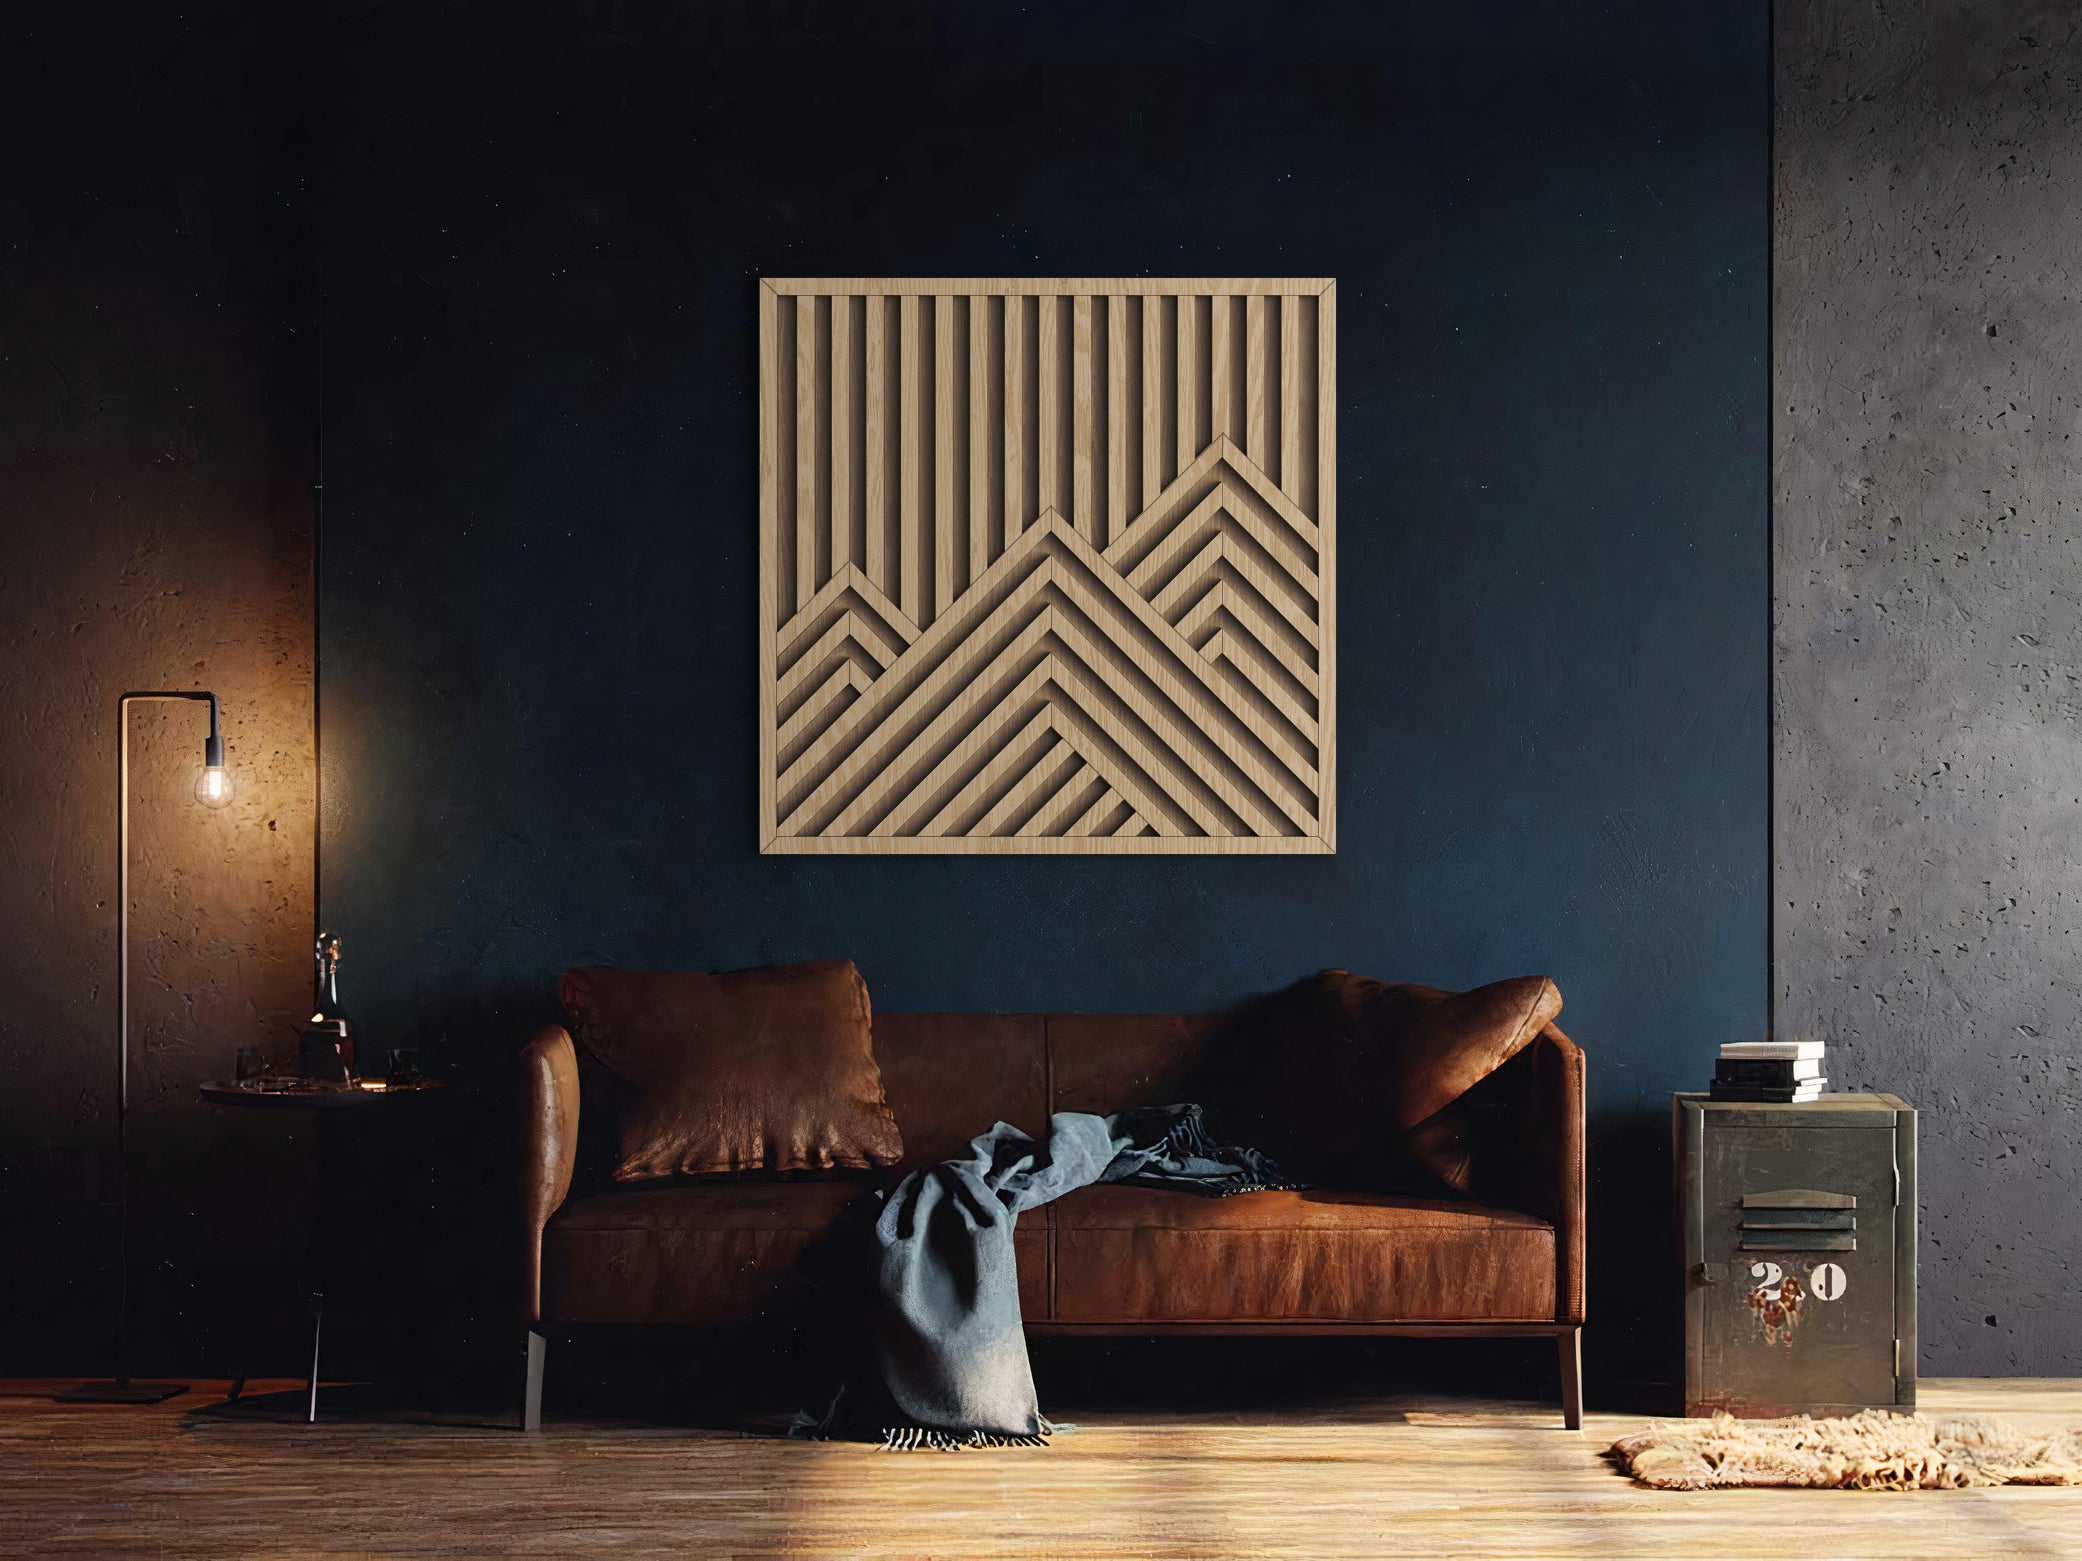 Wood wall art - Geometric wood wall decor - Mountains wall art